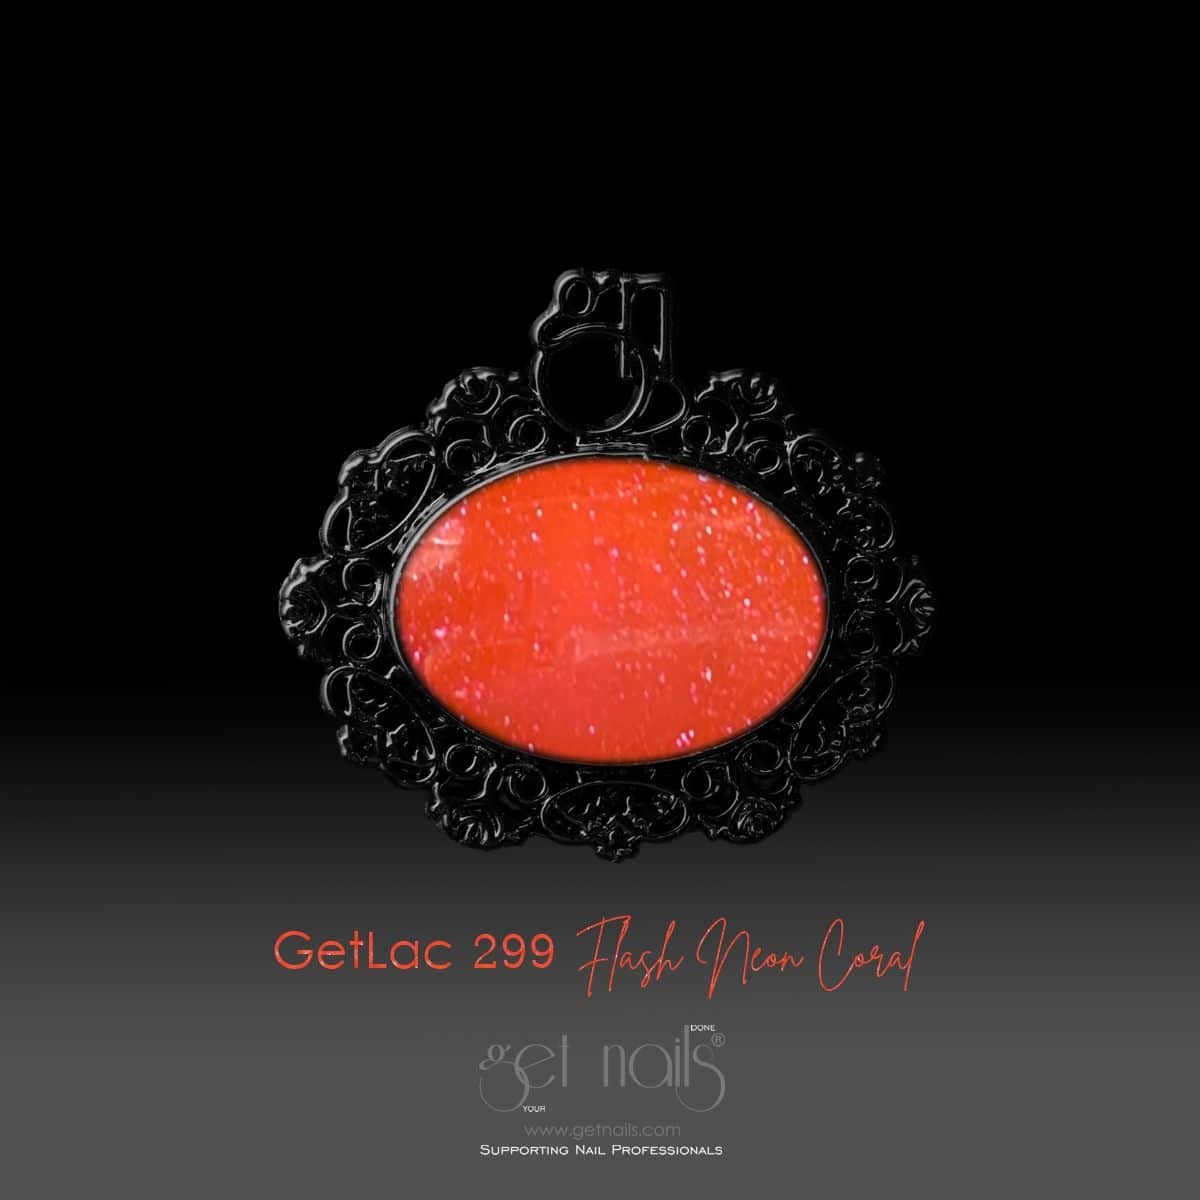 Get Nails Austria - GetLac 299 Flash Neon Coral 15g